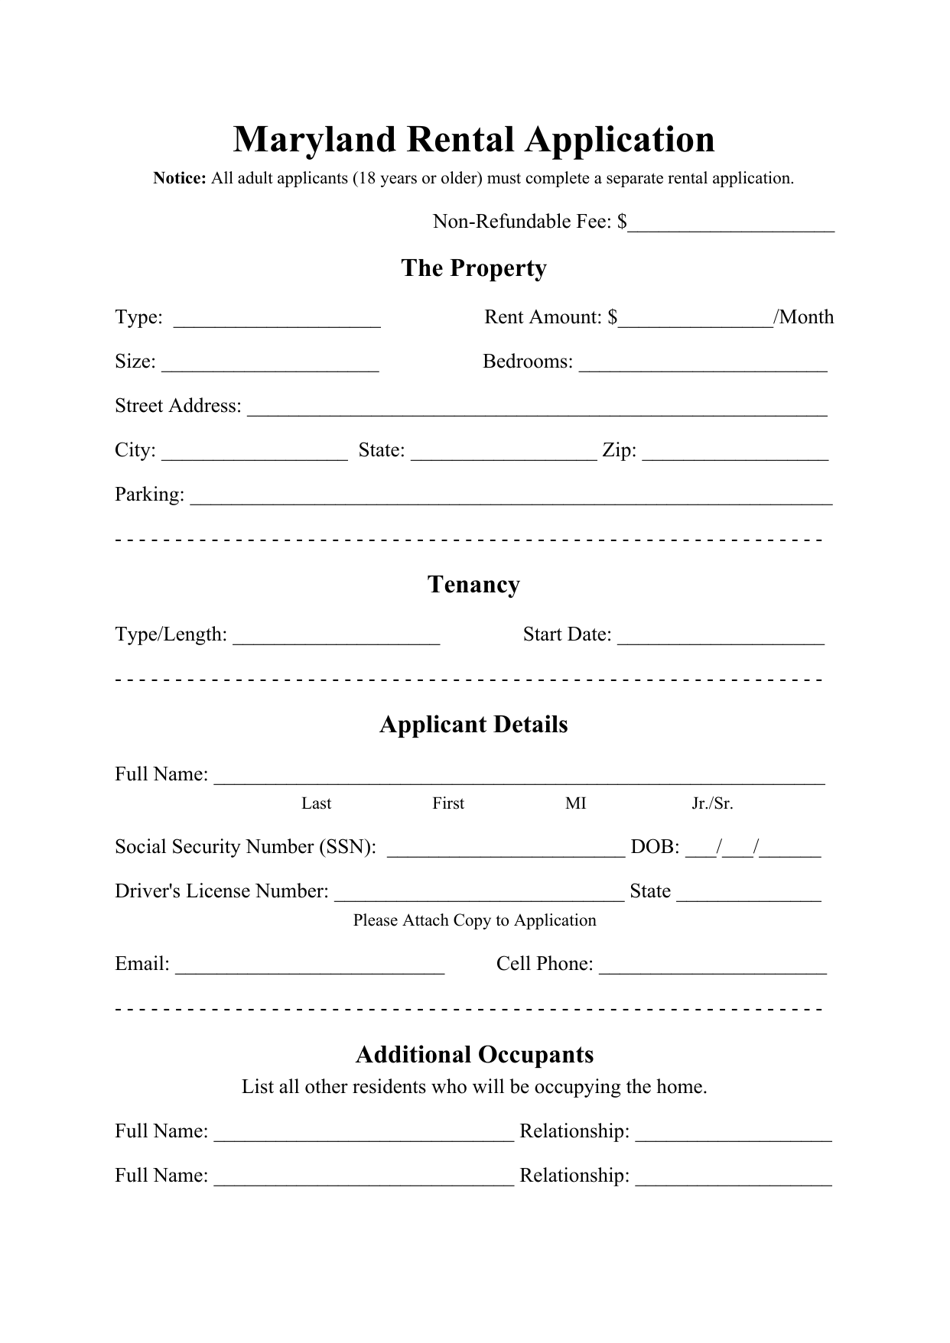 maryland rental application form download printable pdf